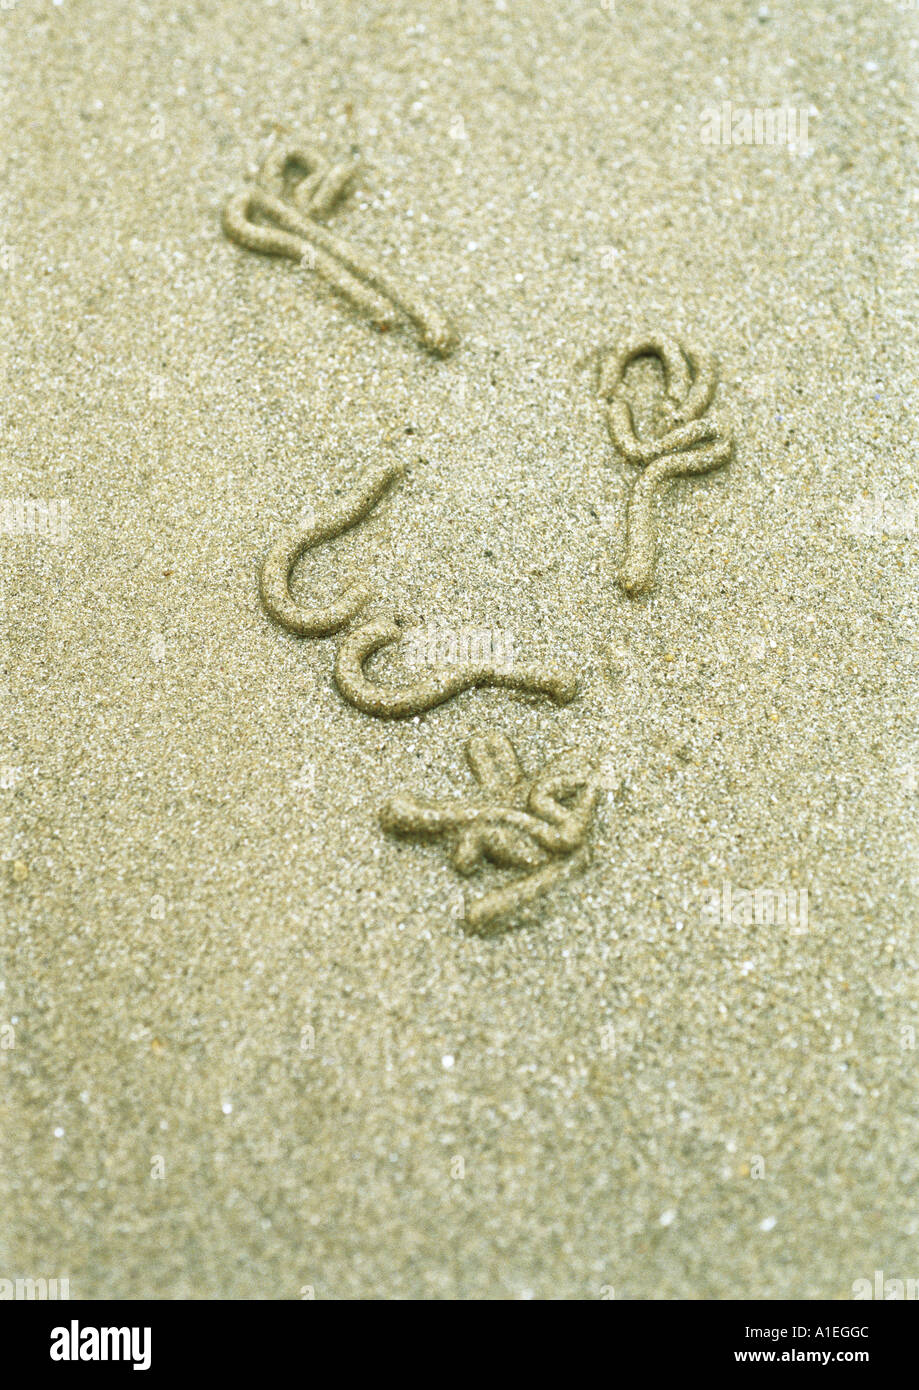 Sand worm excrement on beach Stock Photo